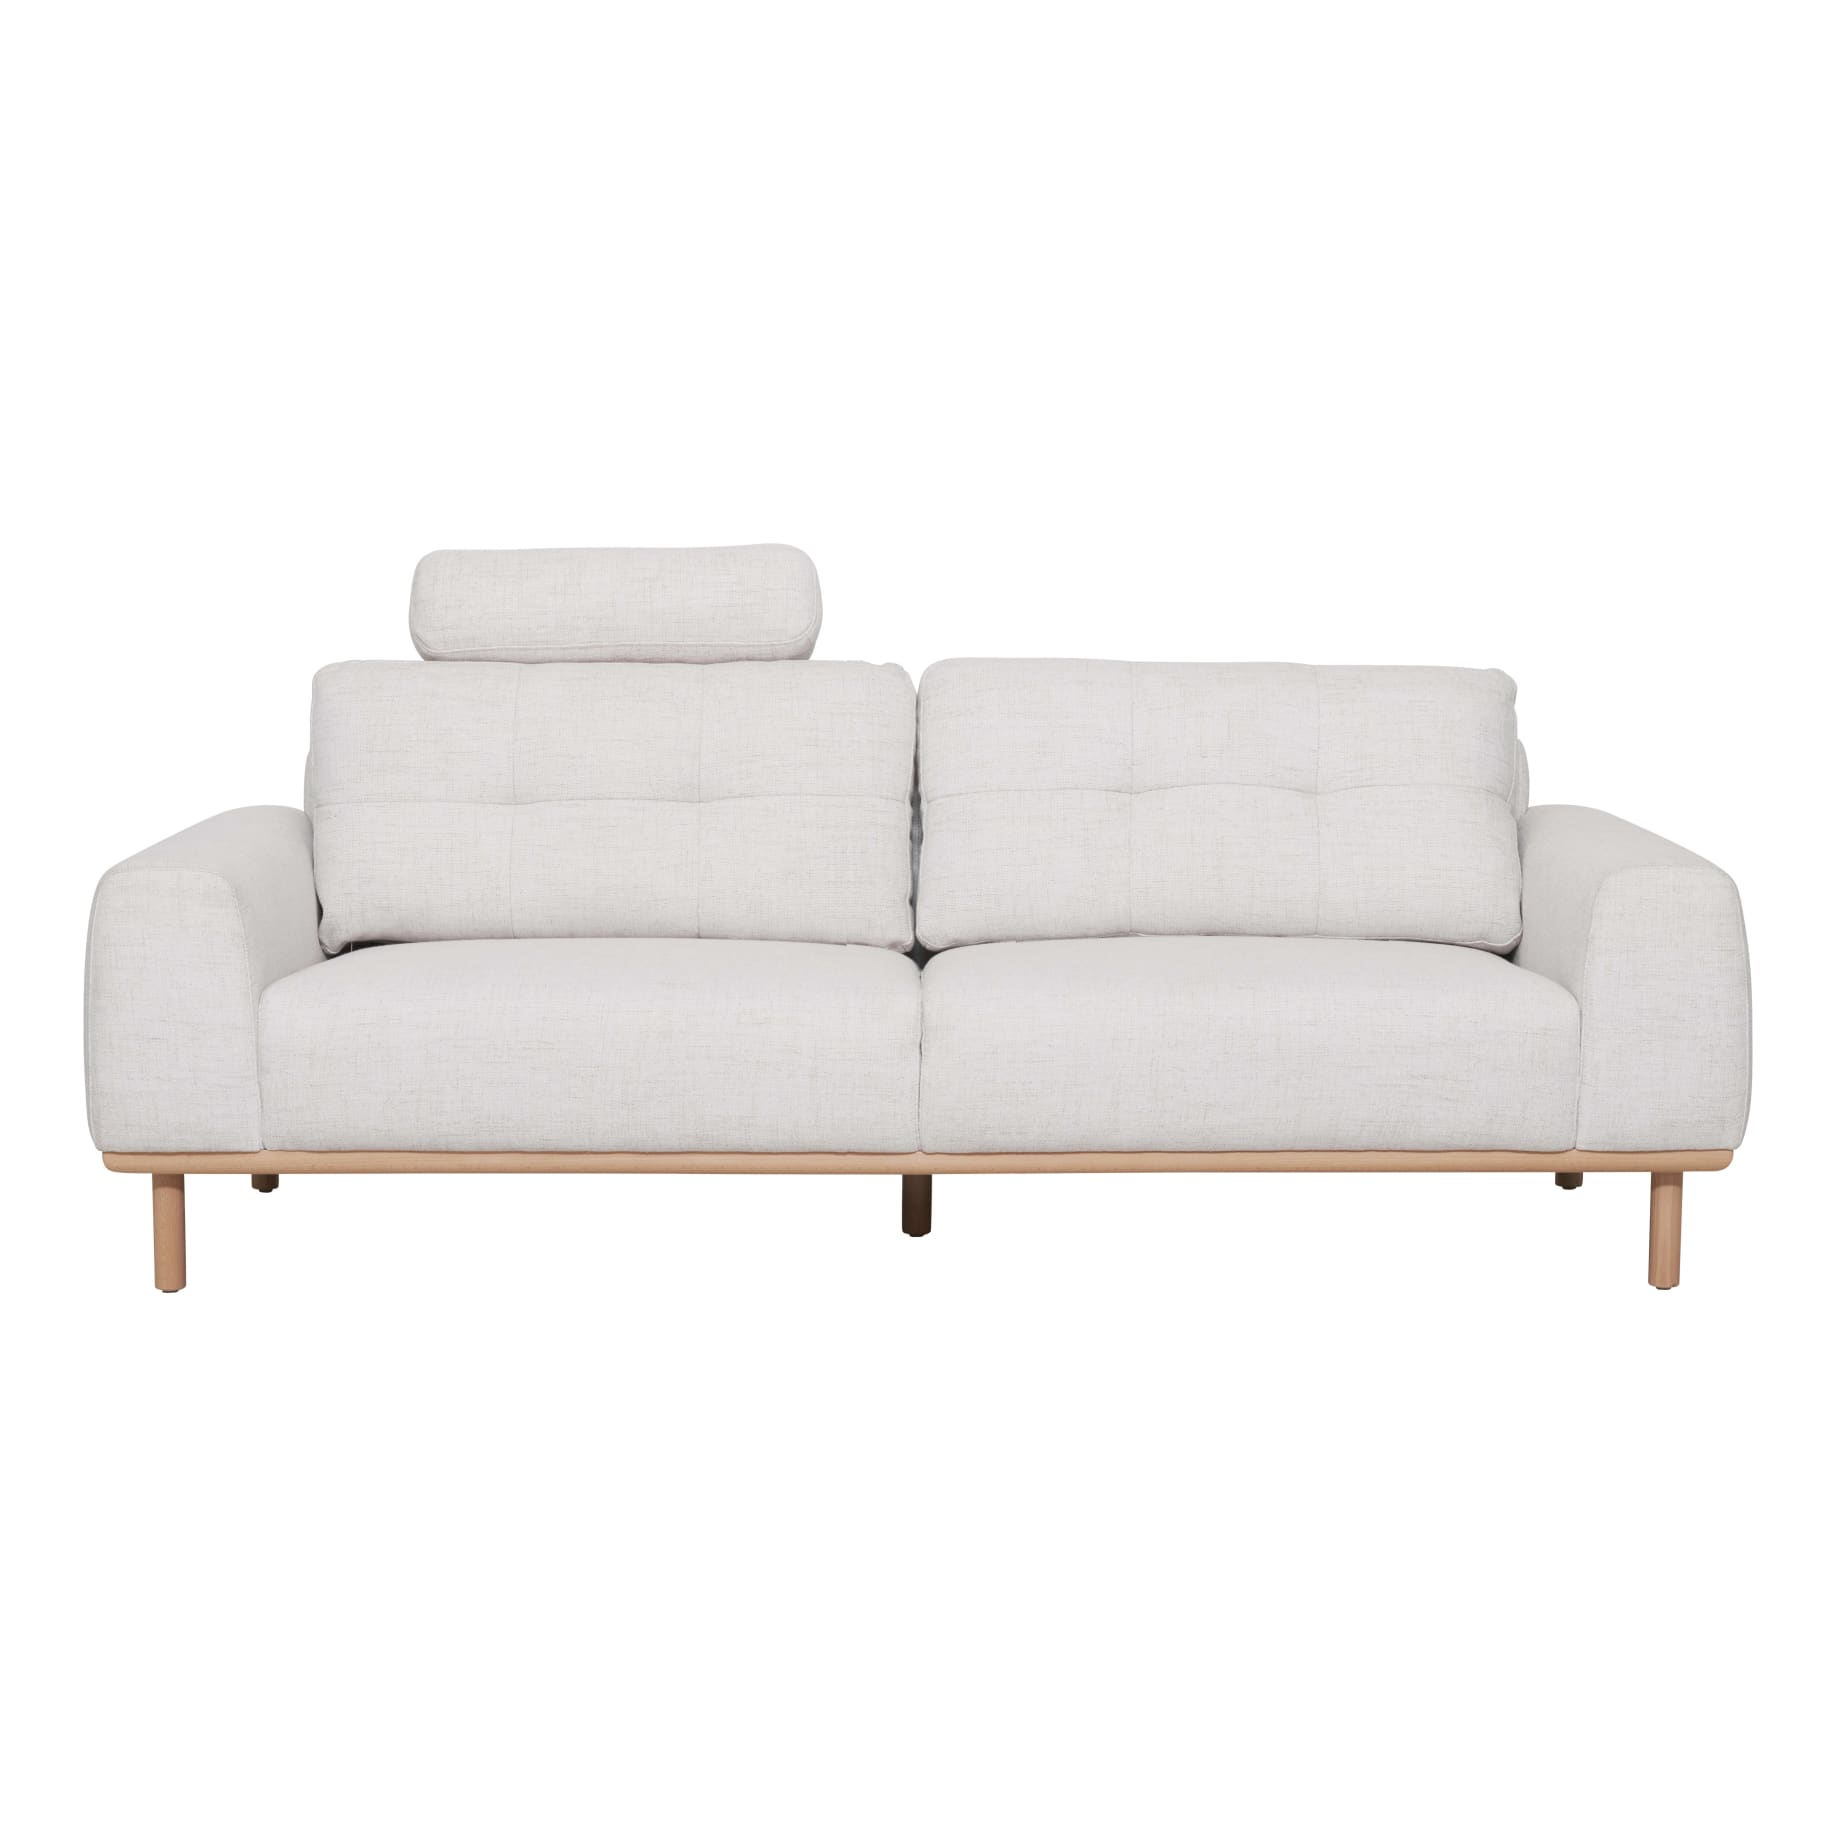 Stratton 3.5 Seater Sofa in Cloud White Sand